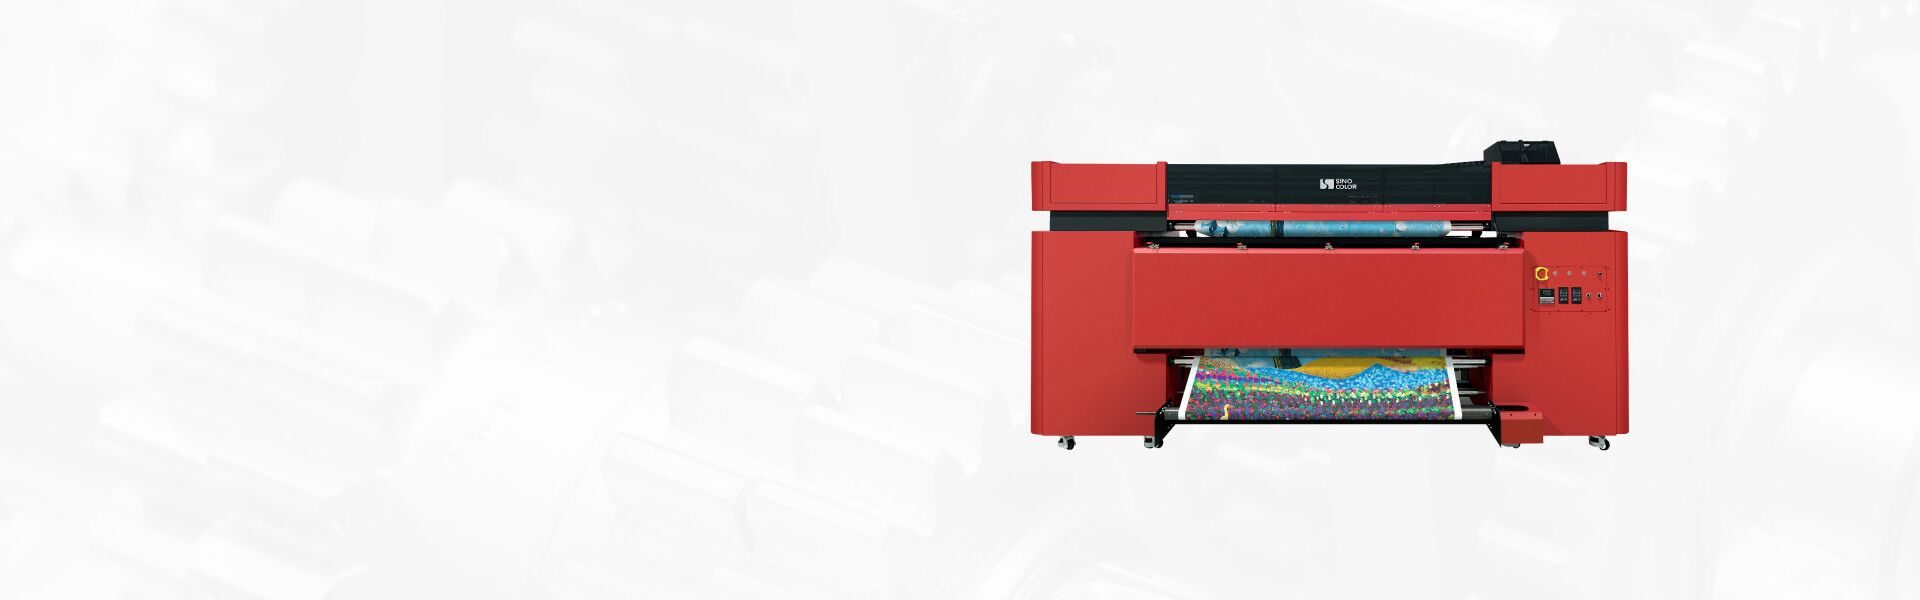 /products/textile-printer/direct-polyester-cotton-printer/impresora-directa-de-poliester-fp-740s.html images